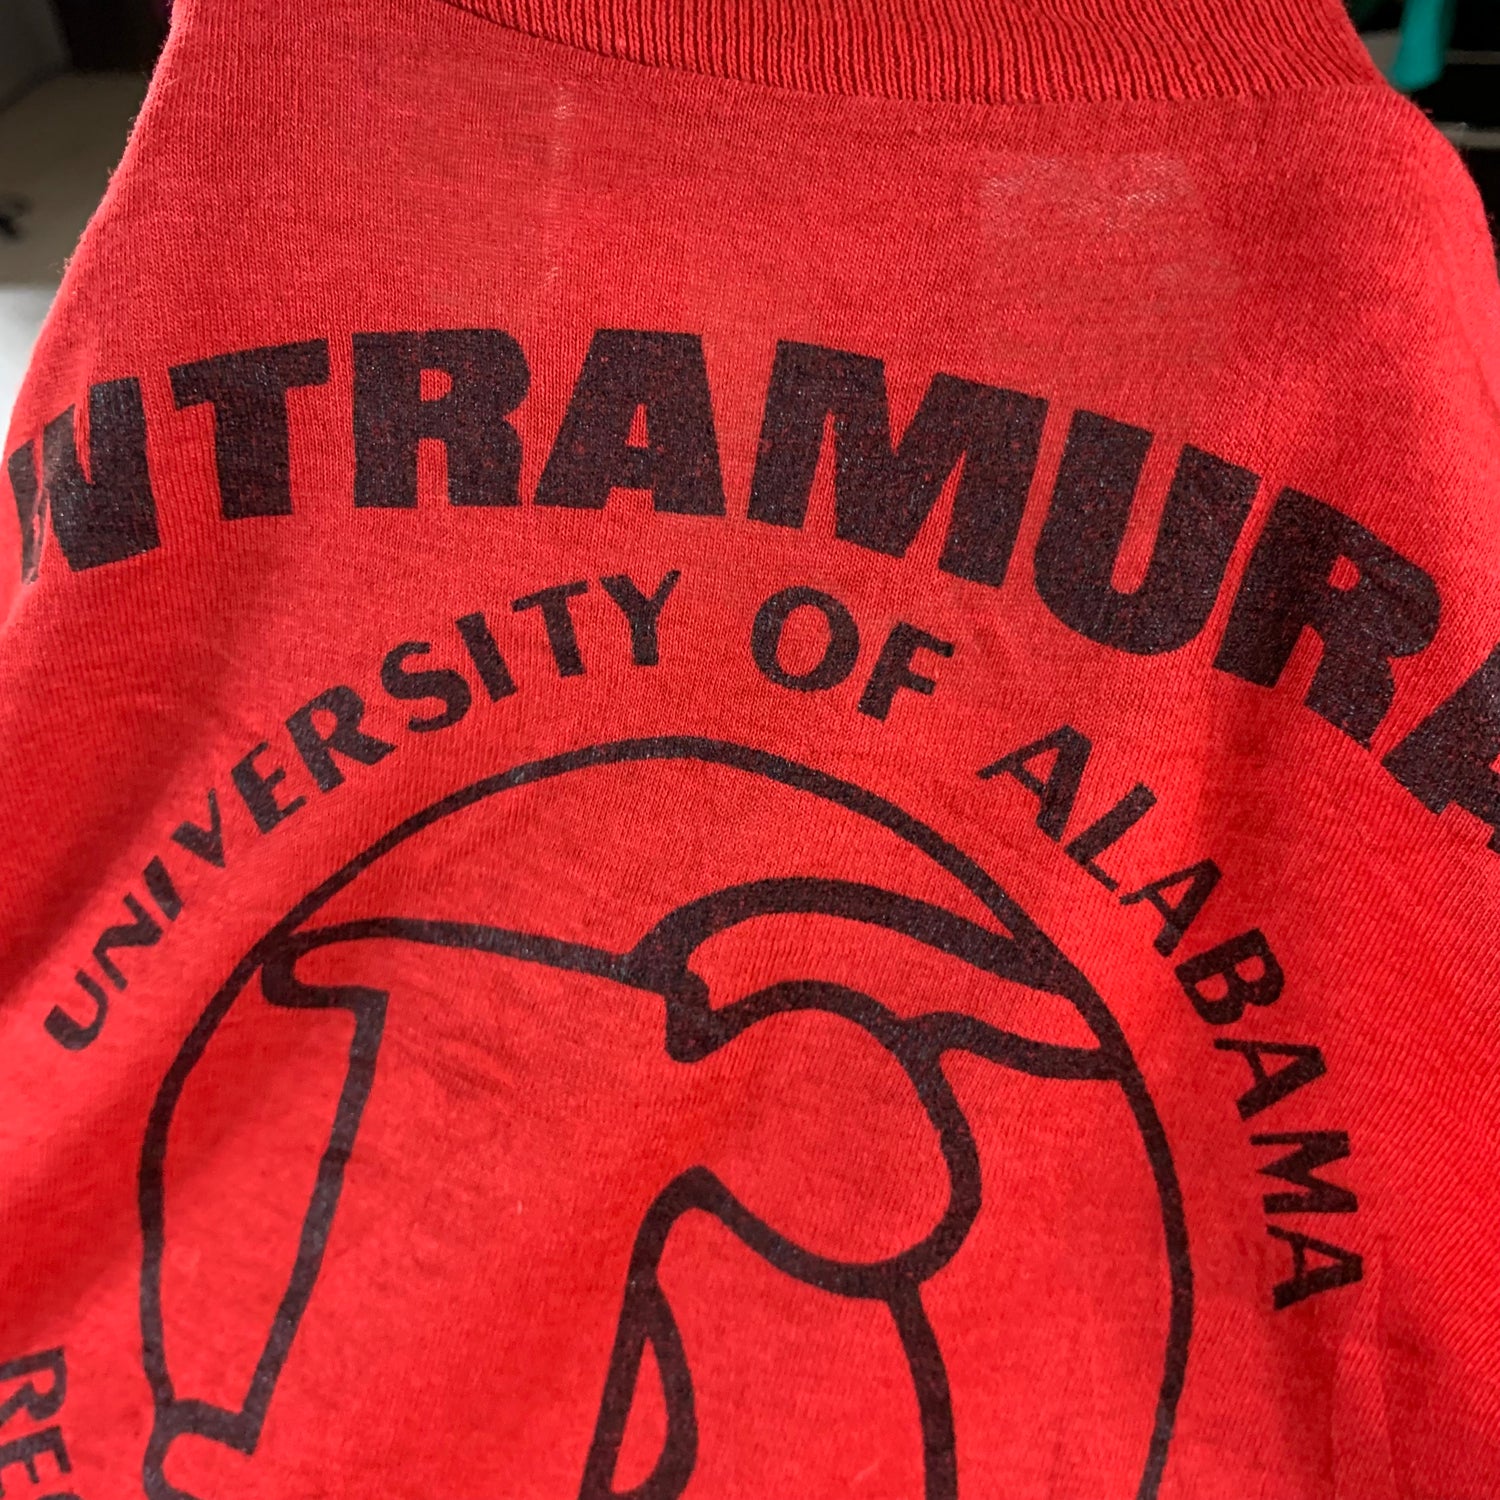 Vintage 1987 University of Alabama T-shirt size XL